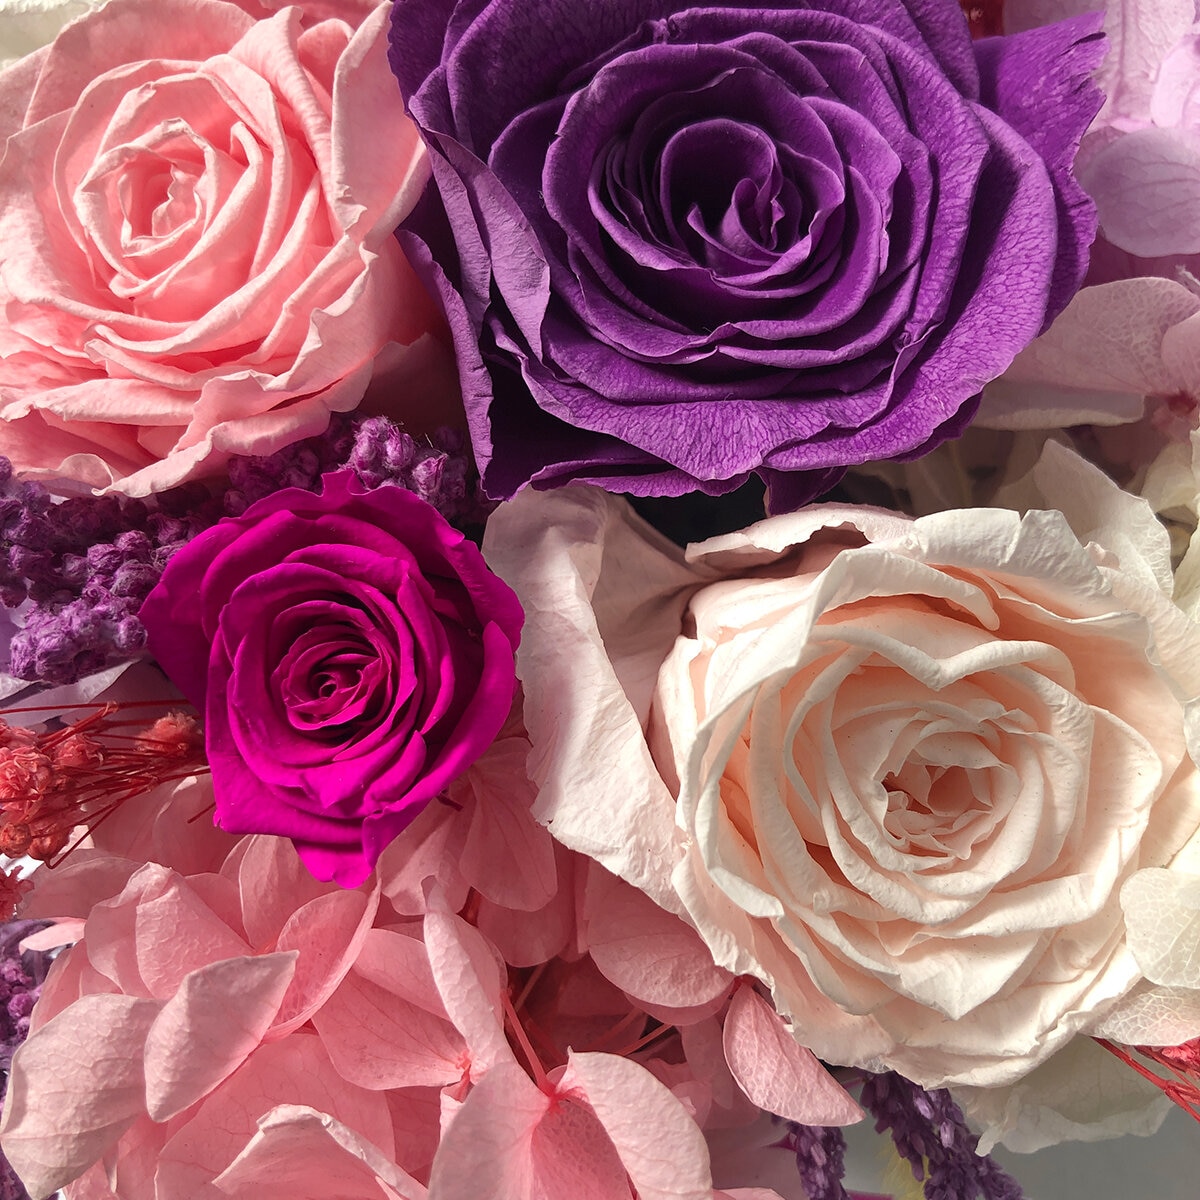 Mina'an Flor Eterna, Bouquet Hot Pink Día de las Madres, con Flores y Follaje Preservados, Duración 6 meses